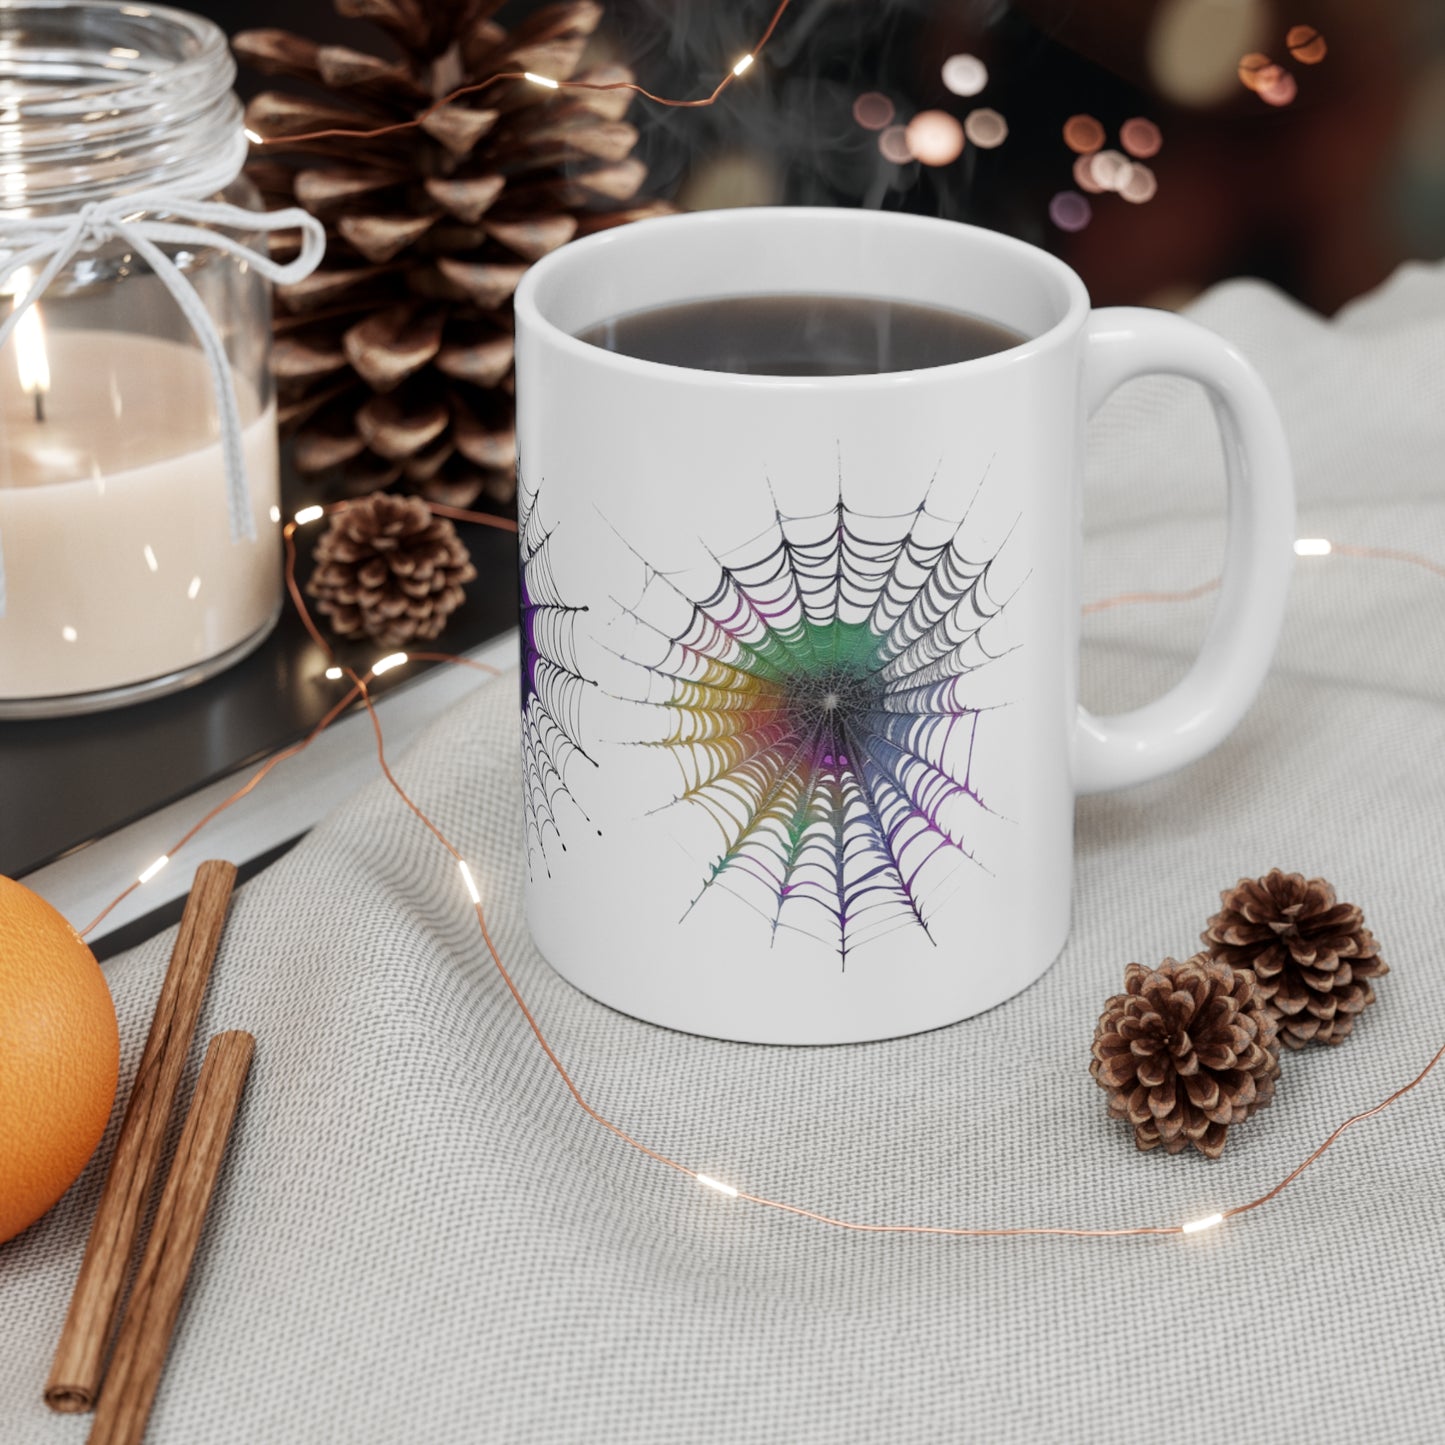 Spiderwebs Art Mug - Ceramic Coffee Mug 11oz